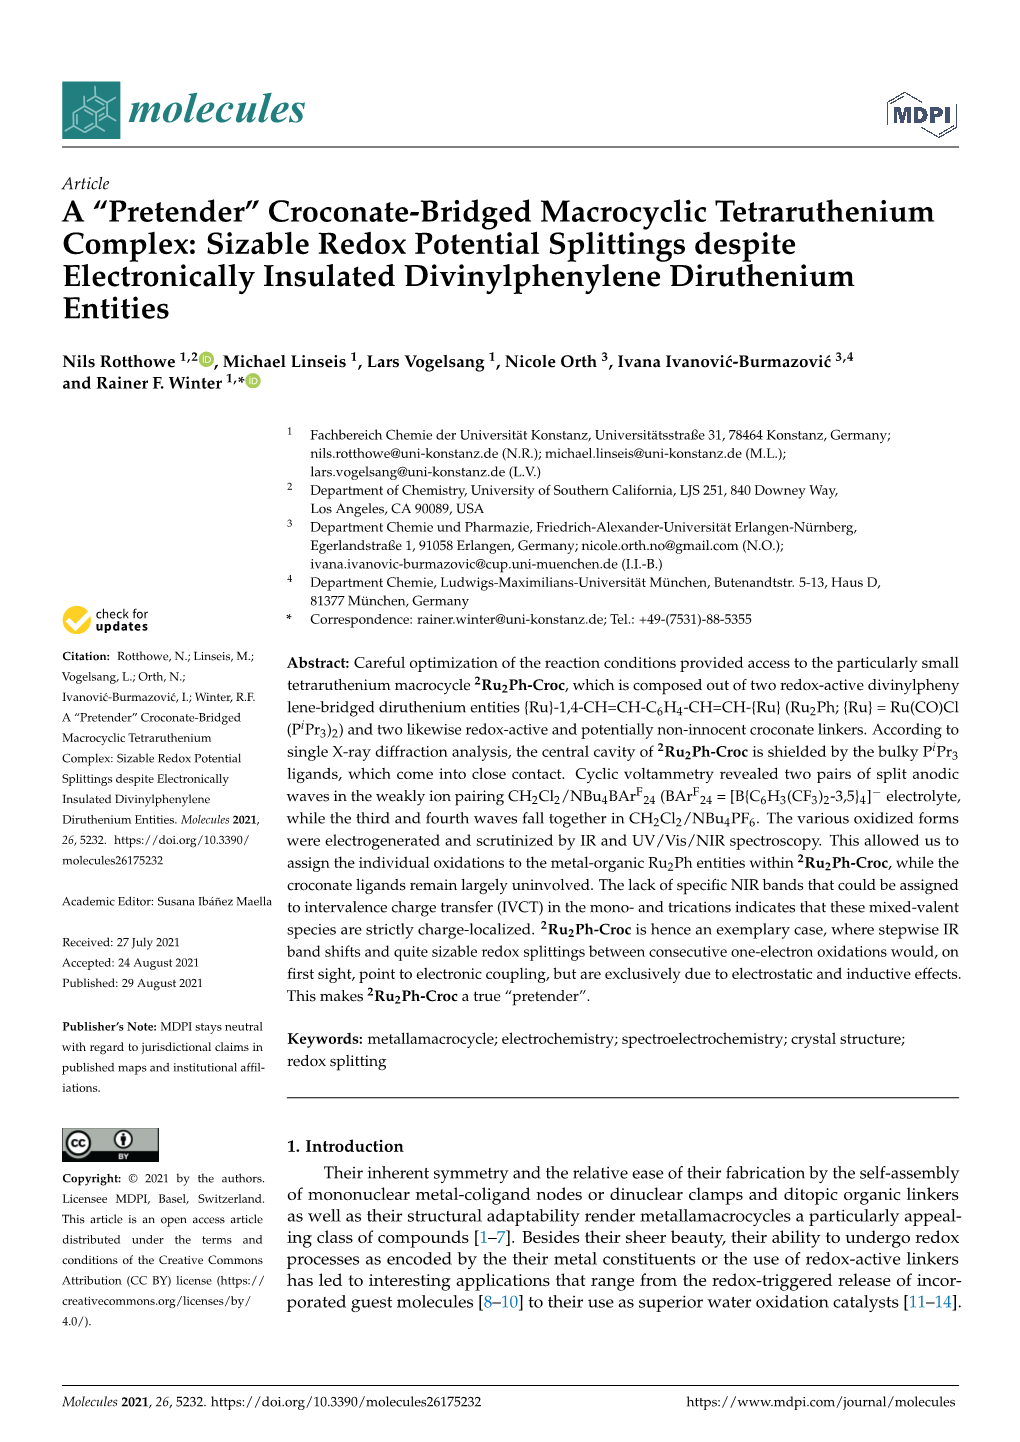 Croconate-Bridged Macrocyclic Tetraruthenium Complex: Sizable Redox Potential Splittings Despite Electronically Insulated Divinylphenylene Diruthenium Entities